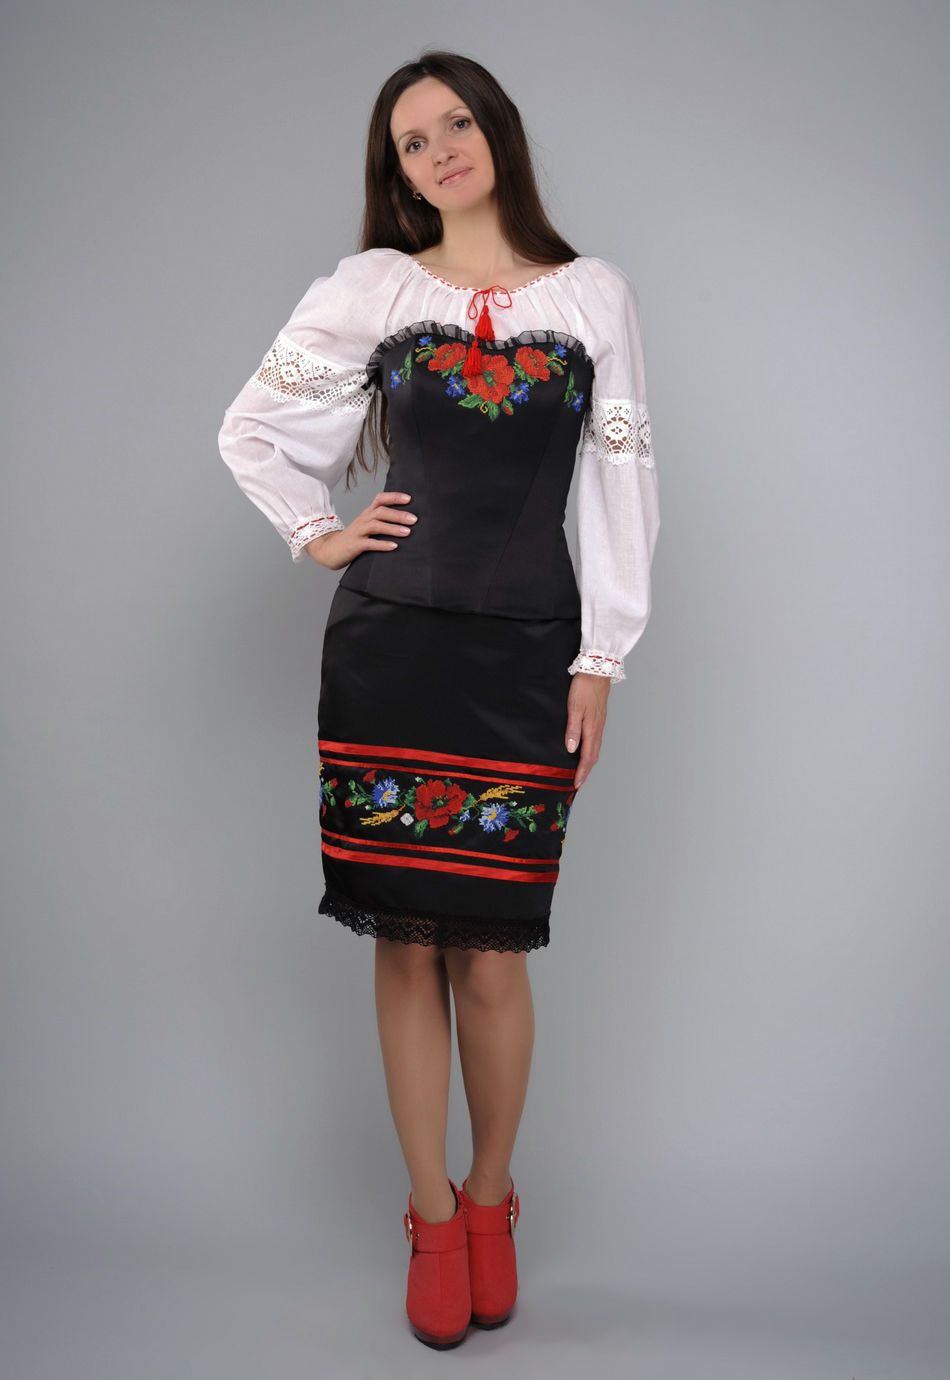 Costume in ethnic style photo 1